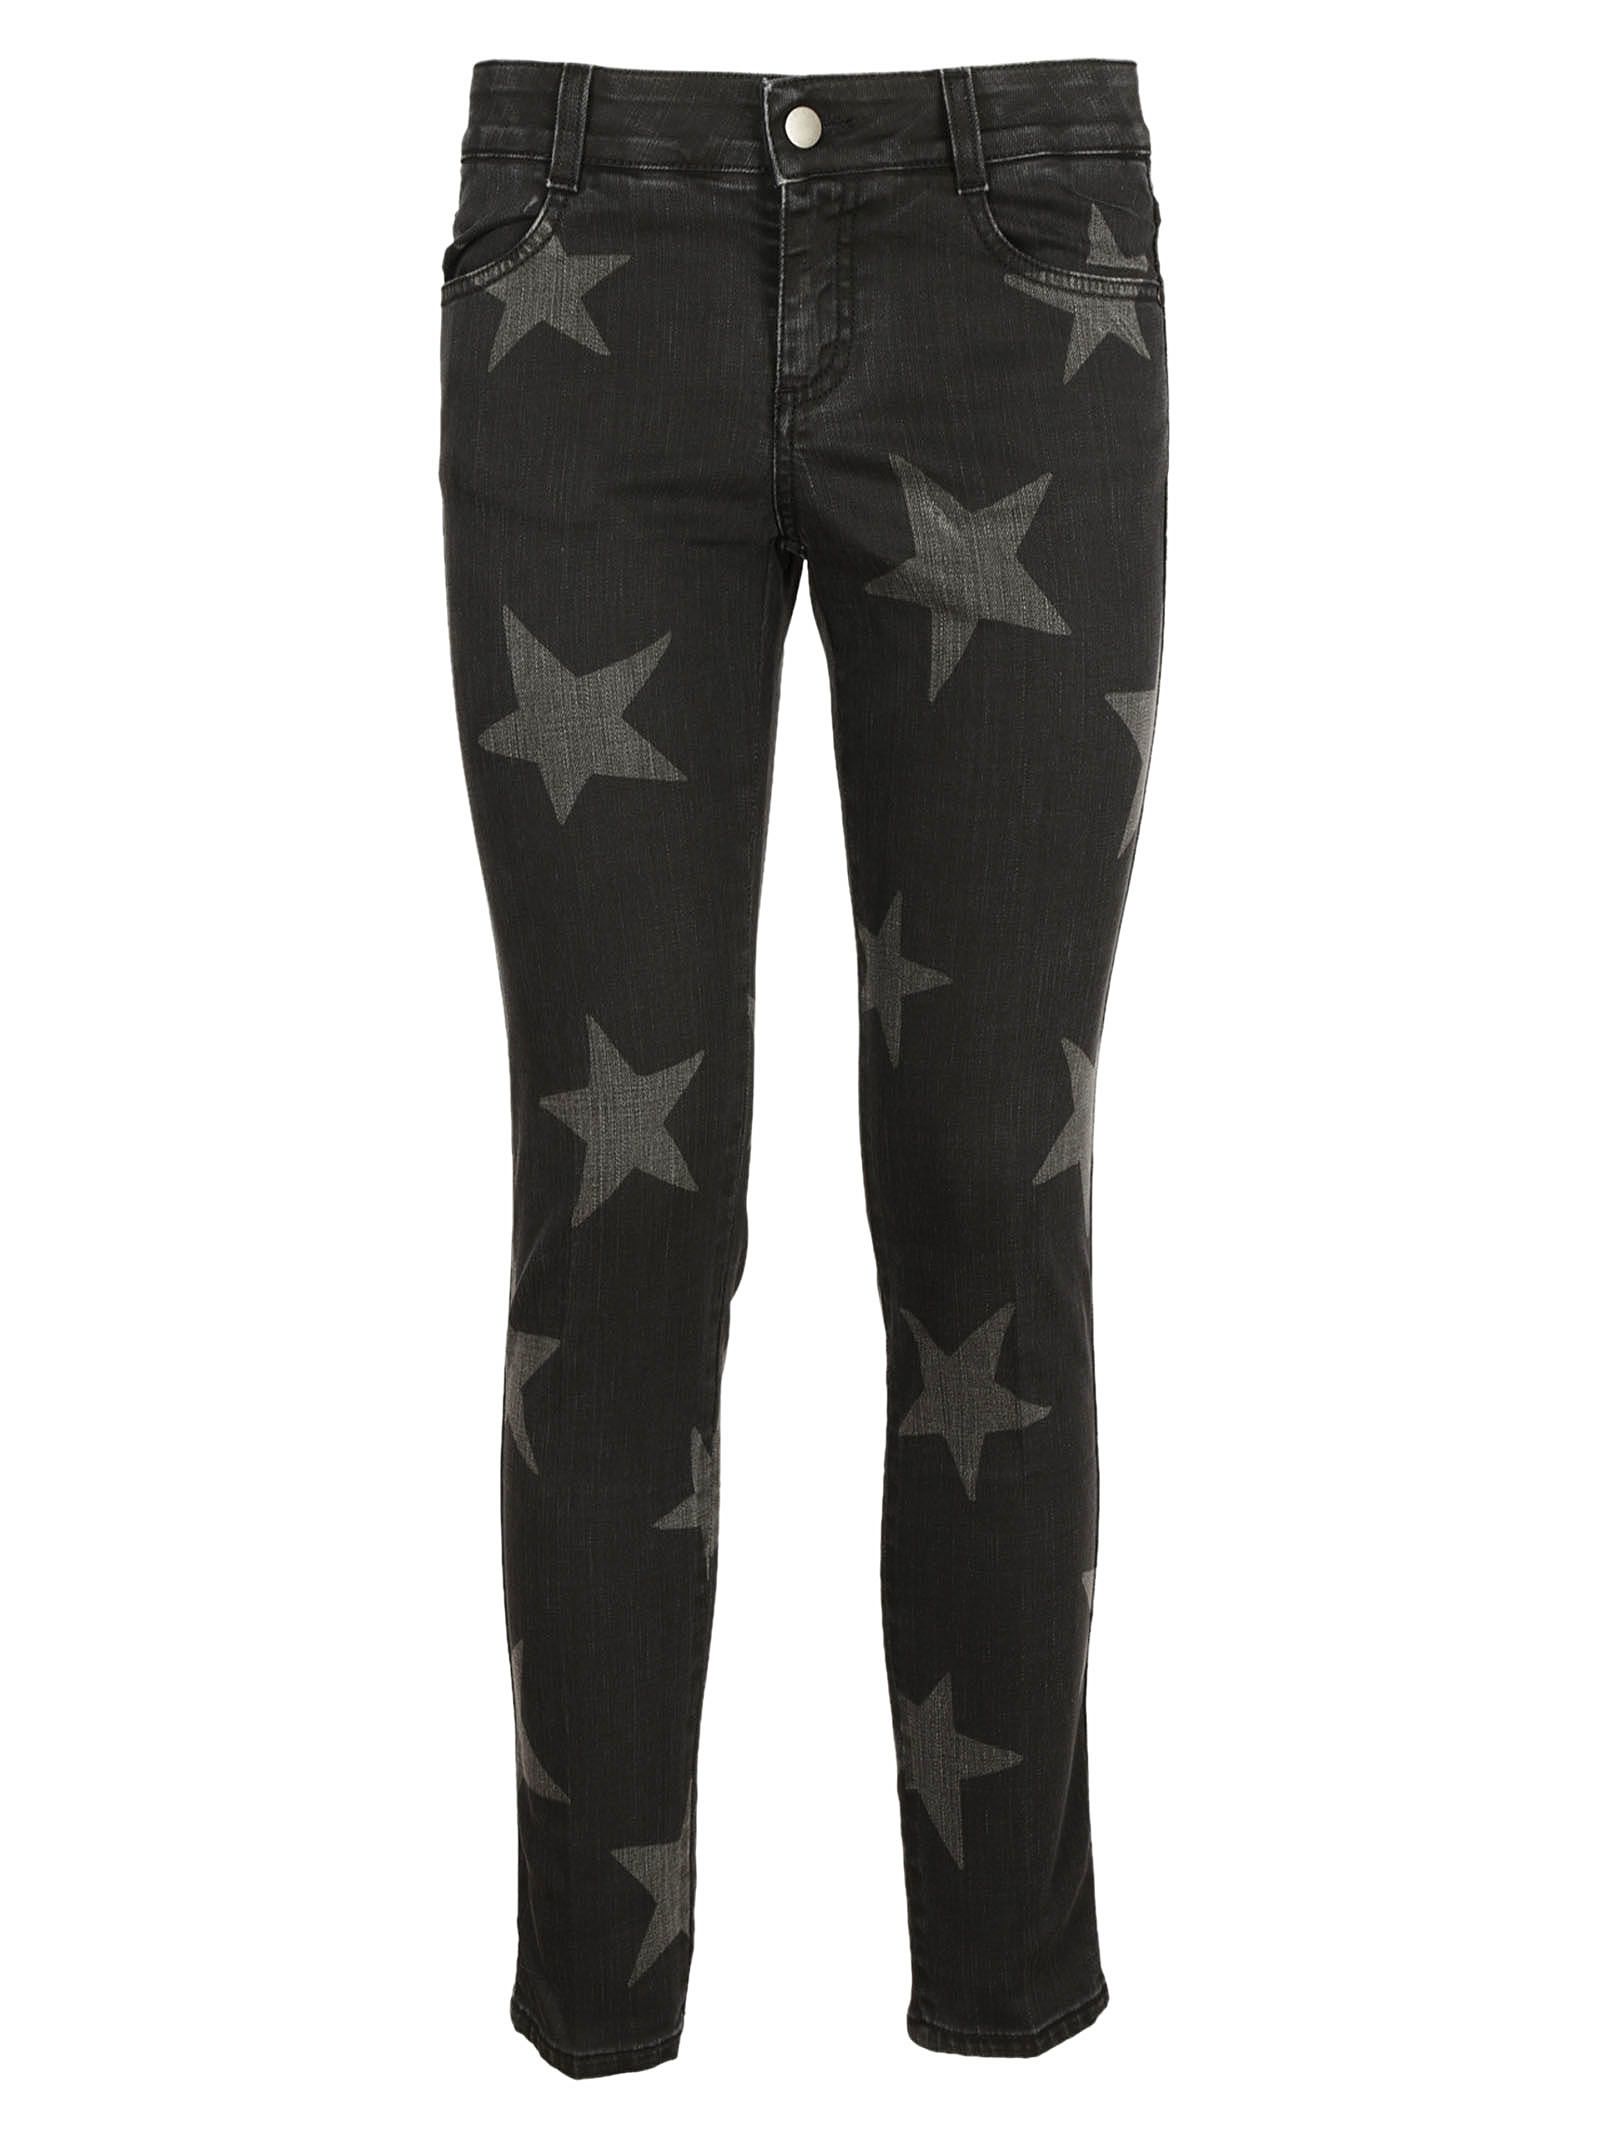 STELLA MCCARTNEY Ankle-Grazer Star Print Skinny Jeans in Blk | ModeSens